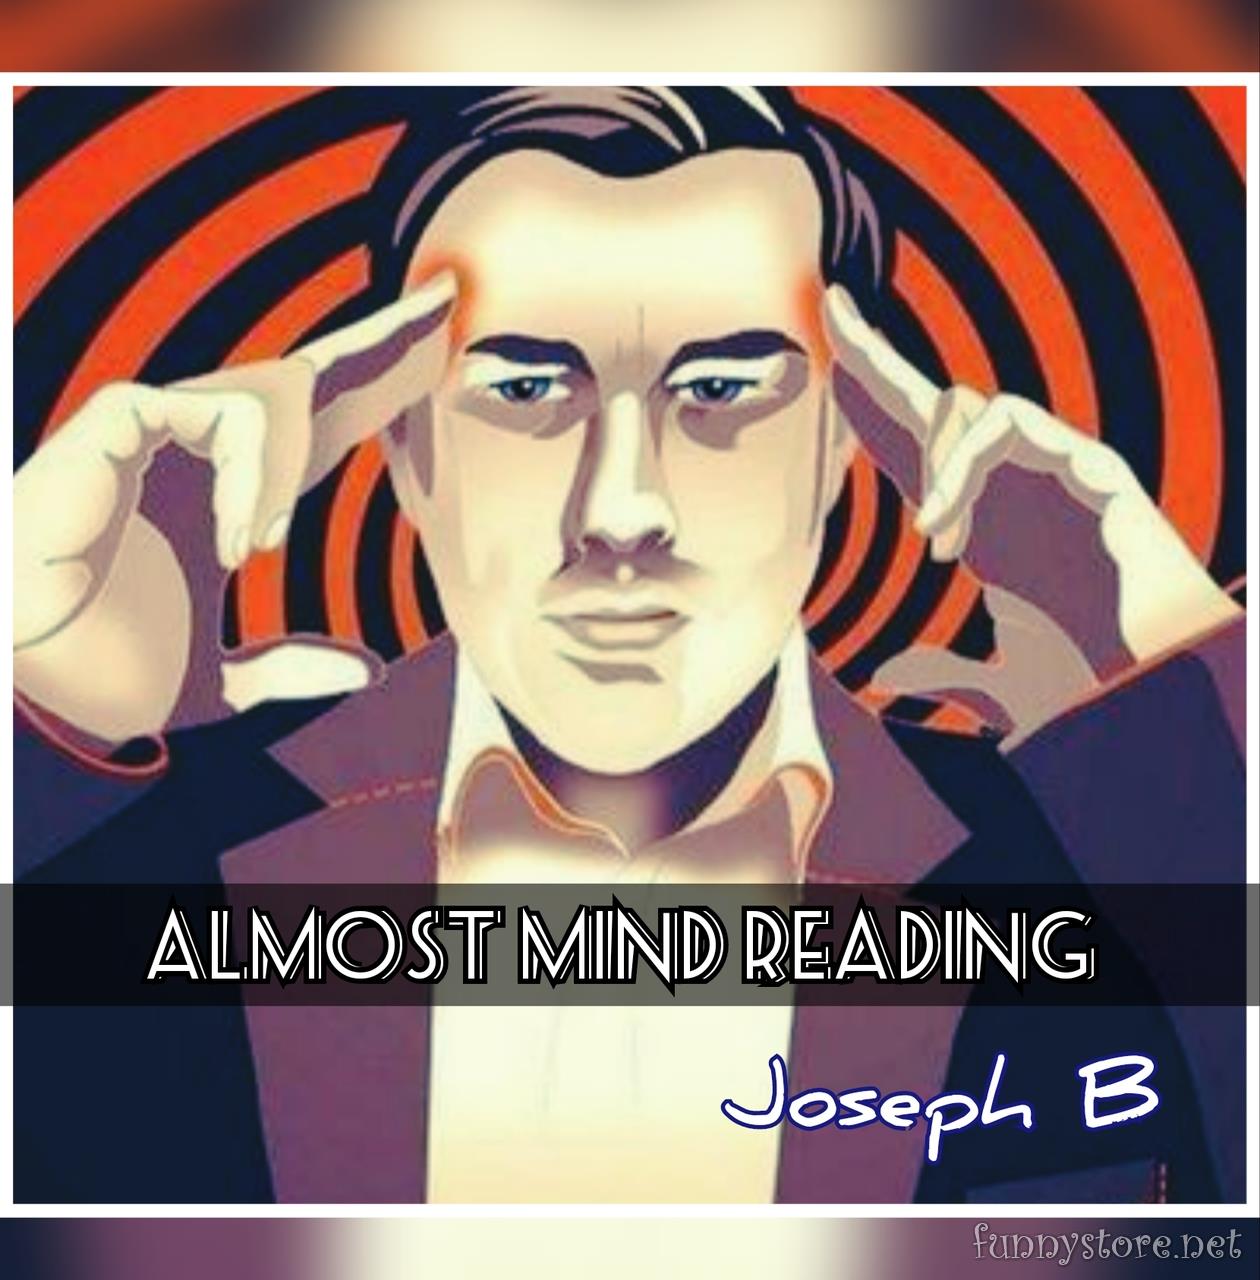 Joseph B - ALMOST MIND READING